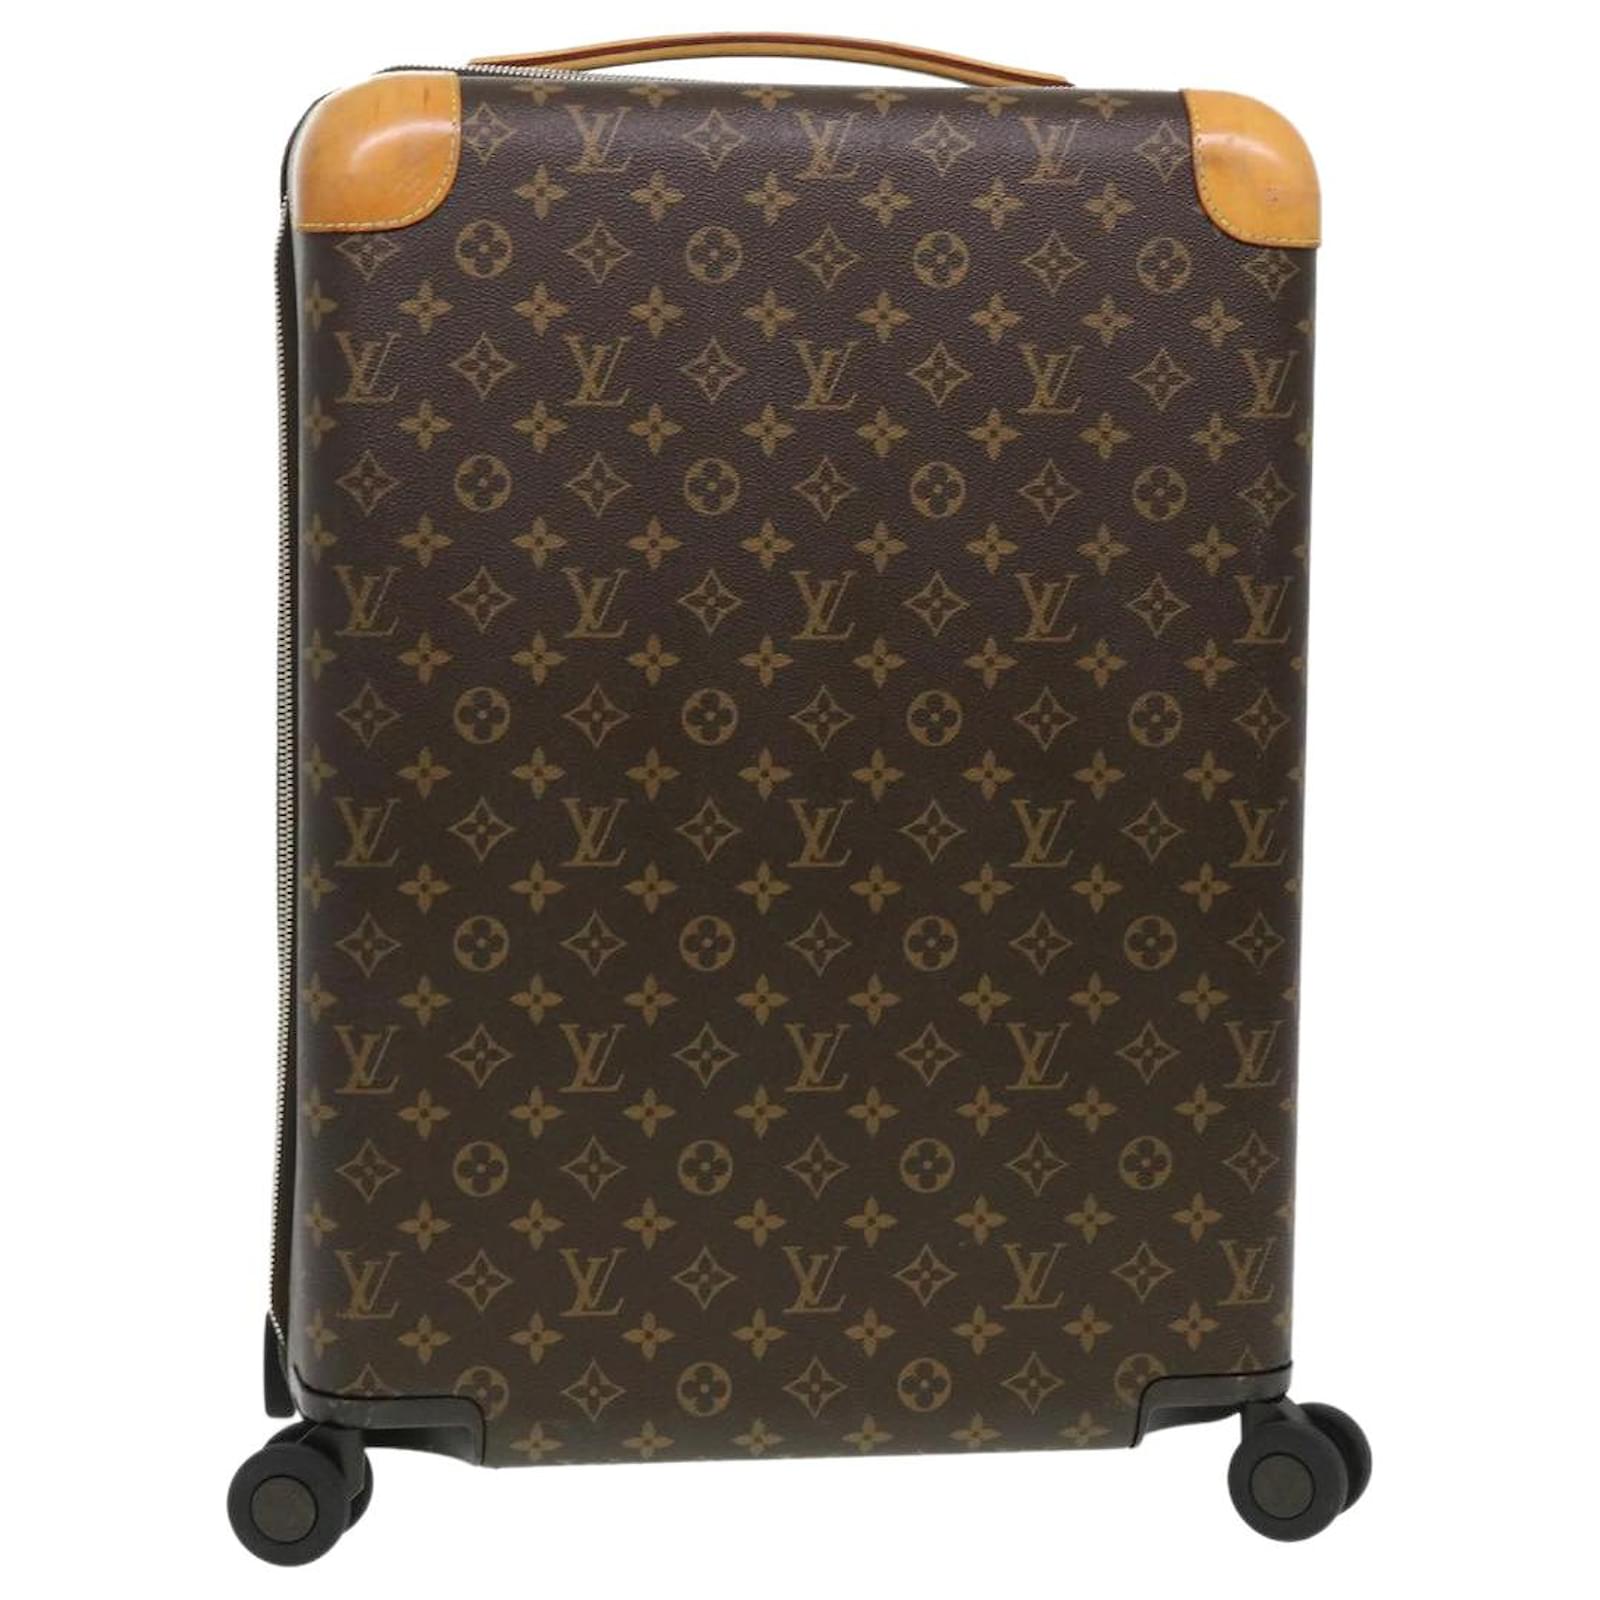 lv monogram luggage